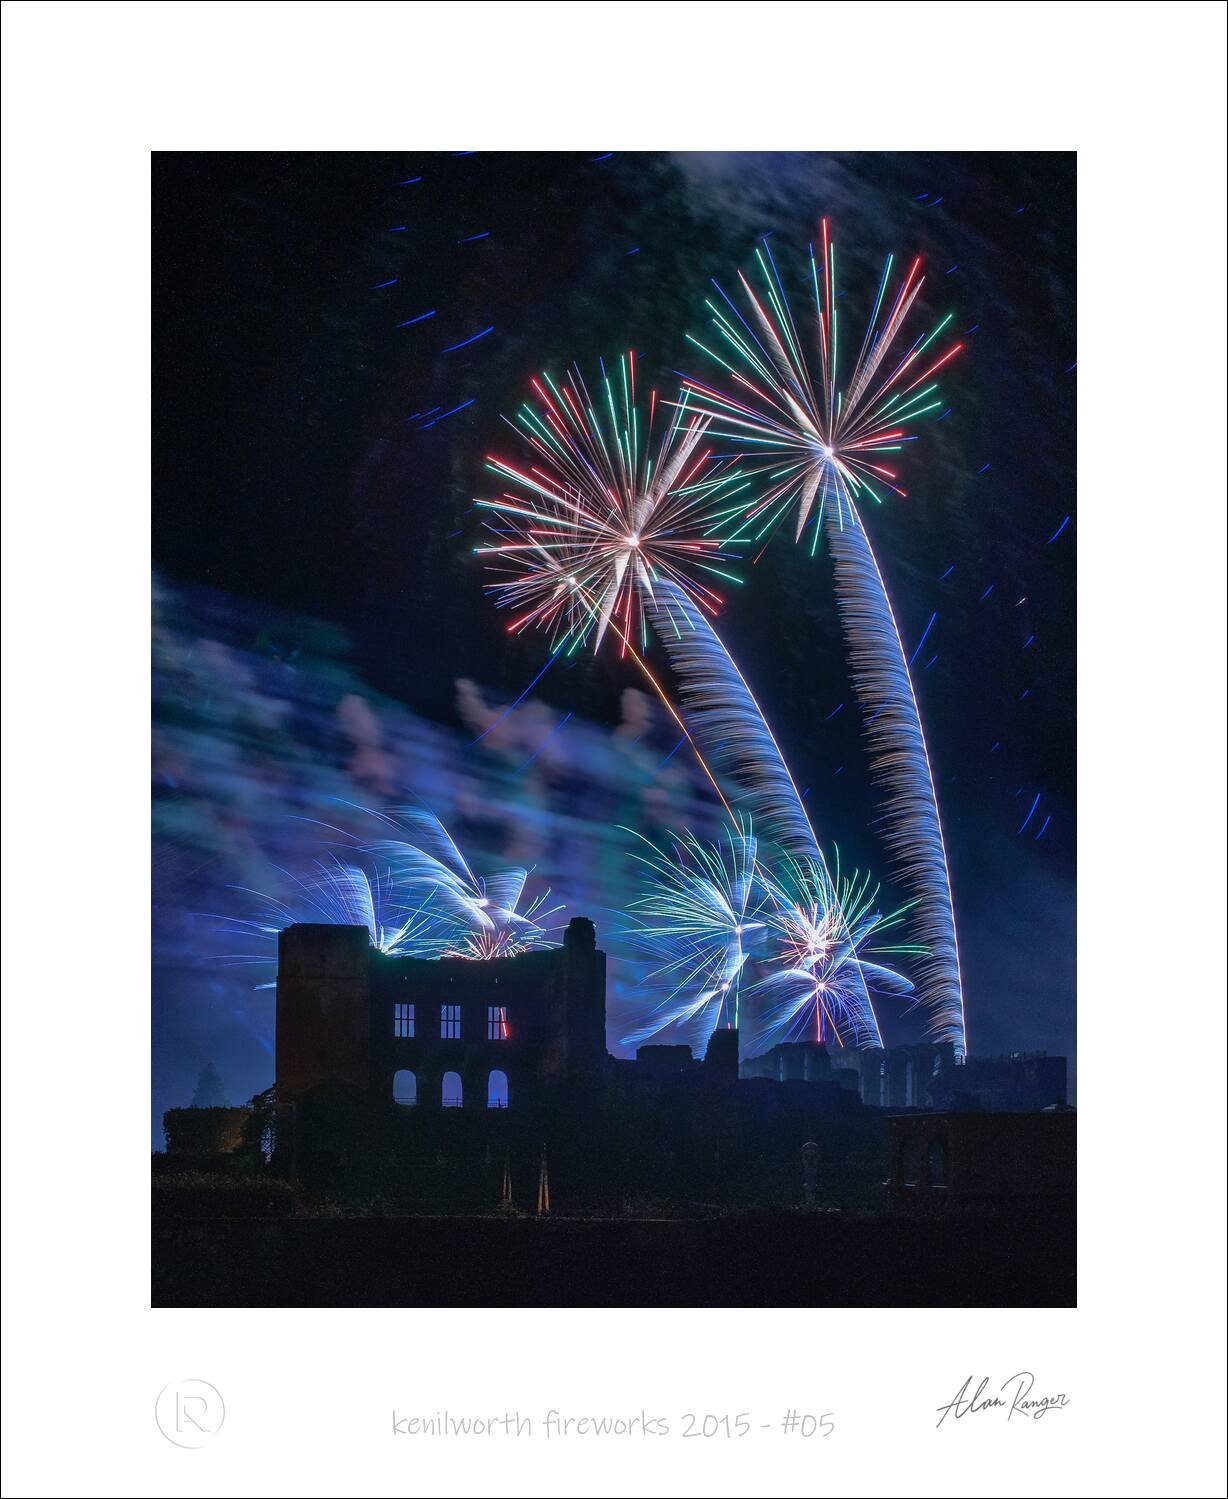 kenilworth fireworks 2015 - #05.jpg